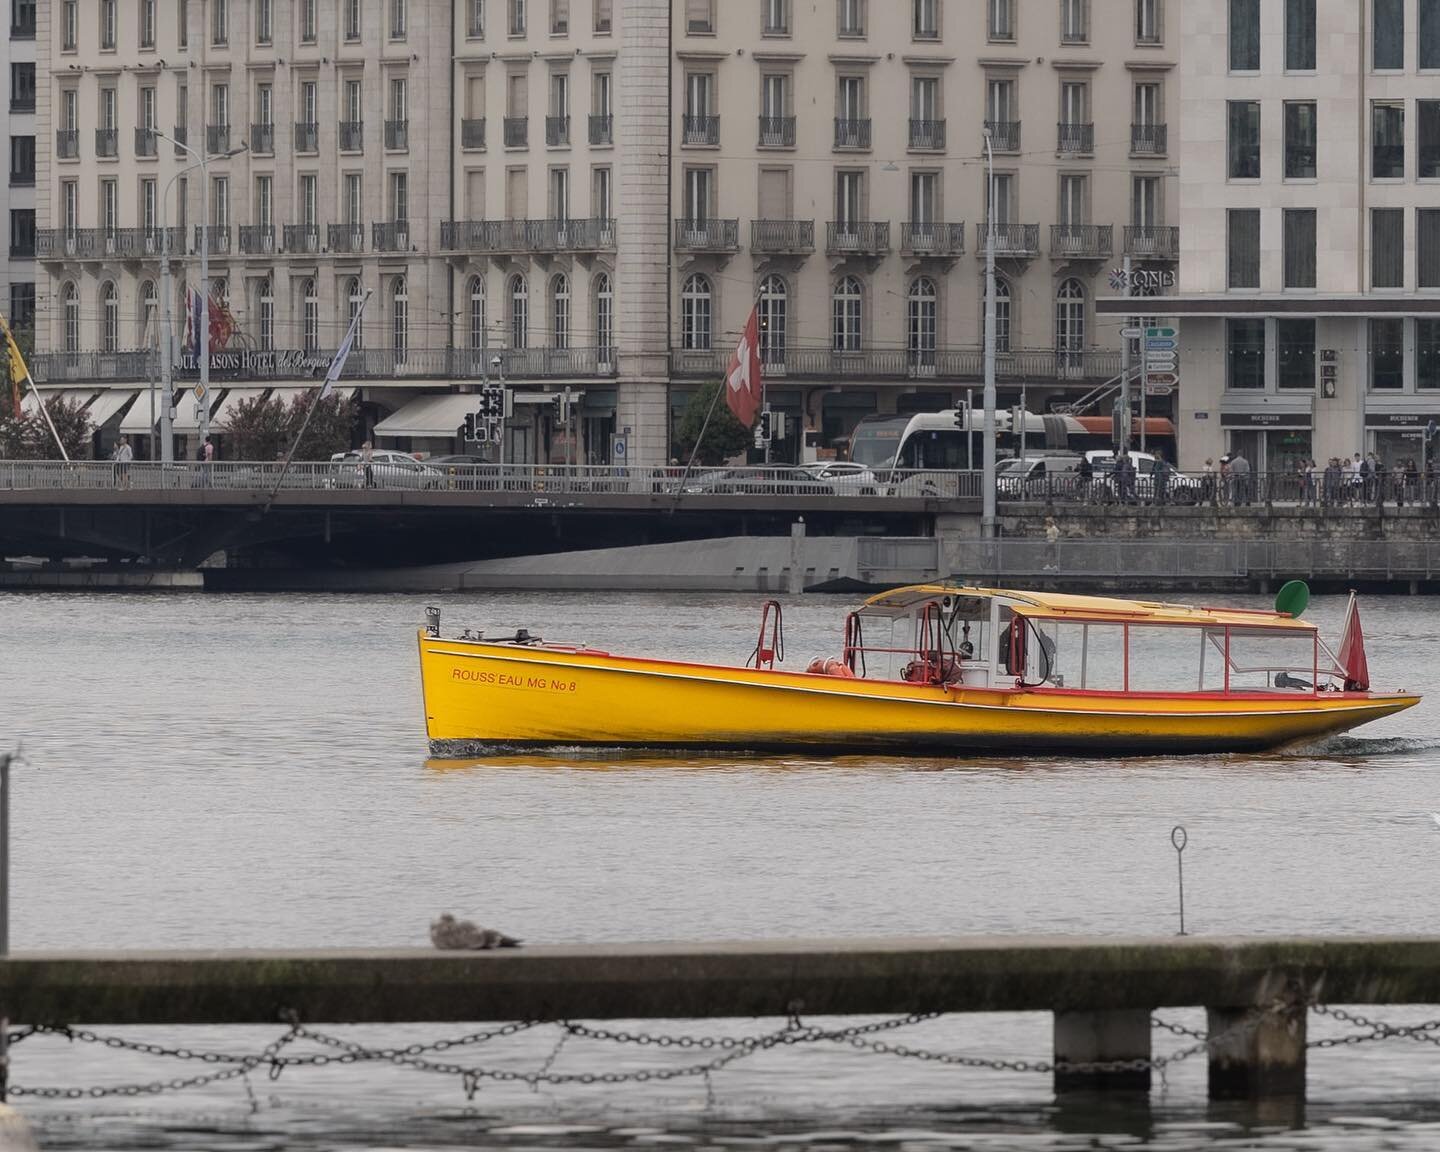 Mes photos pour le concours: #mouettesgenevoises22
@mouettes_genevoises @igersgeneva @tdgch #mouettes #geneve #geneva #geneva #geneve #genevalake #genevalife #genevephoto #boat #boats #yellowboat